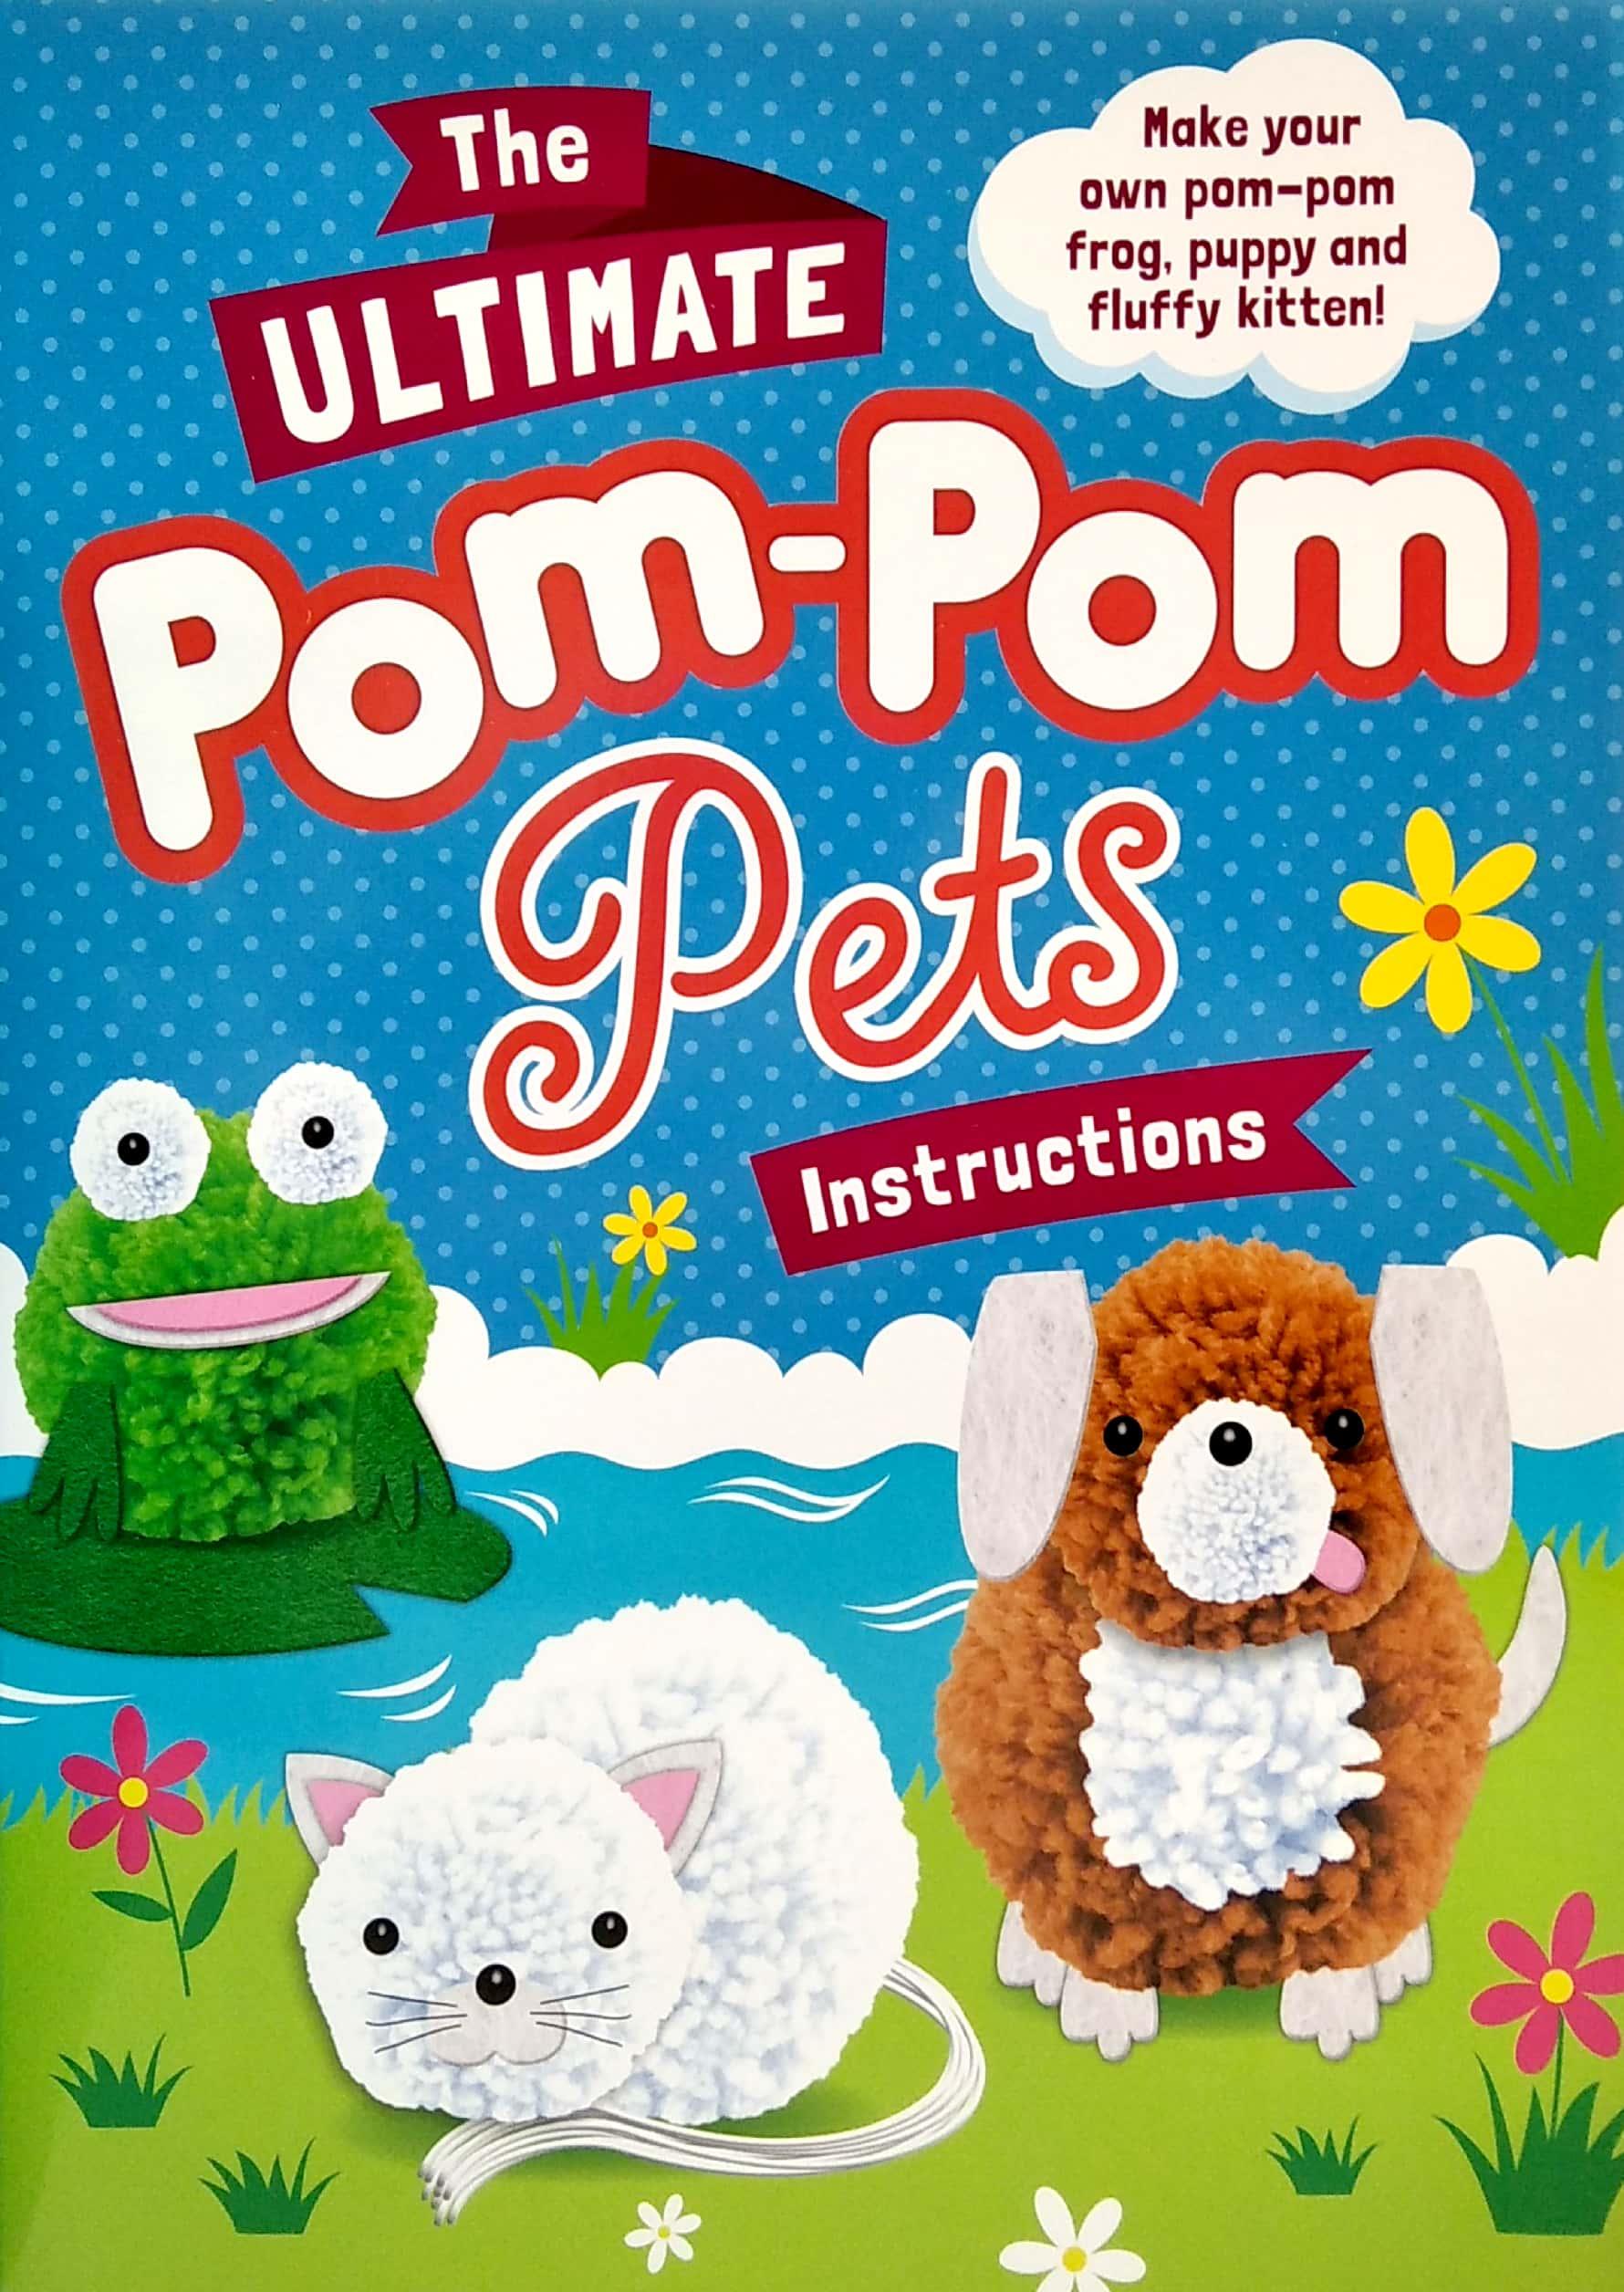 The Ultimate Pom Pom Pets Book & Kit